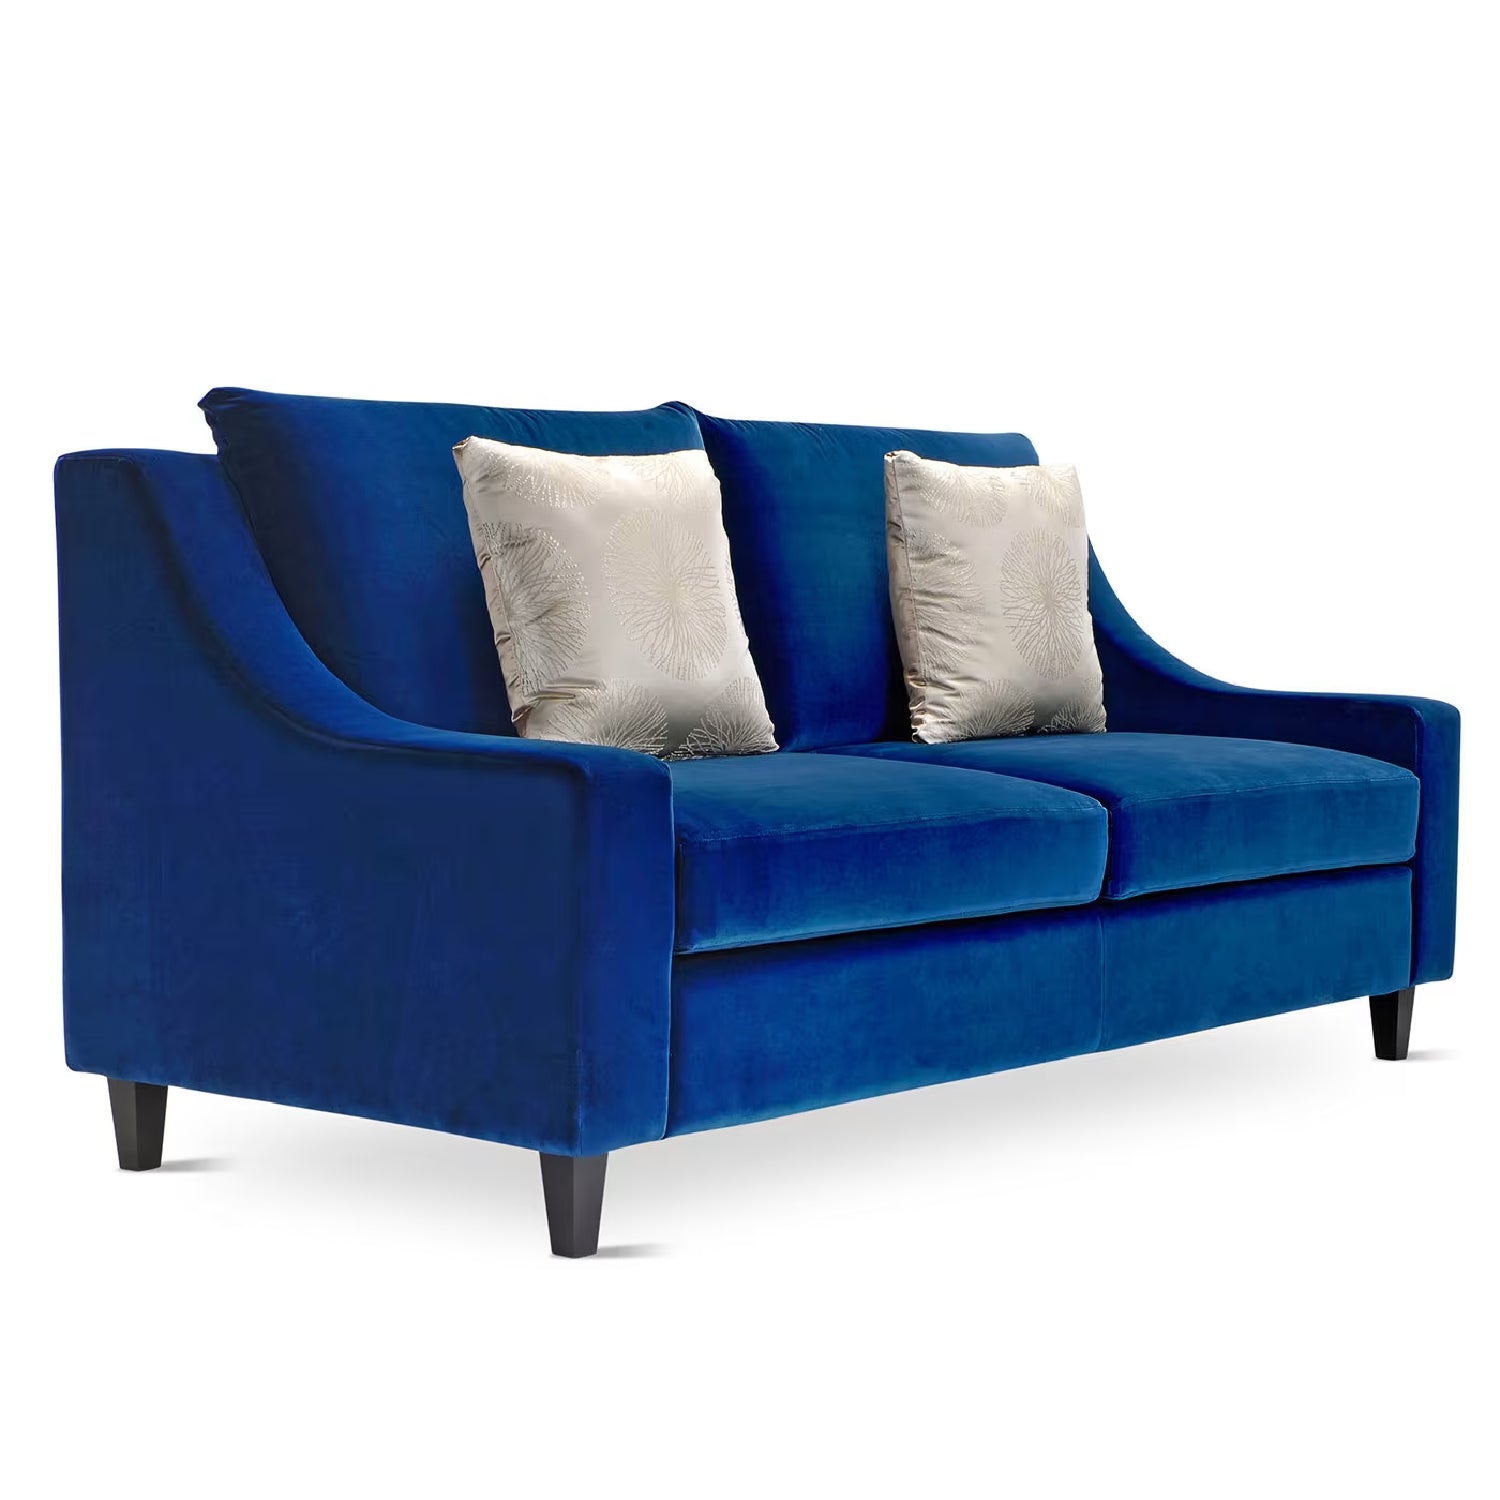 ST108 Cobalt Blue Sofa by Domingo Salotti